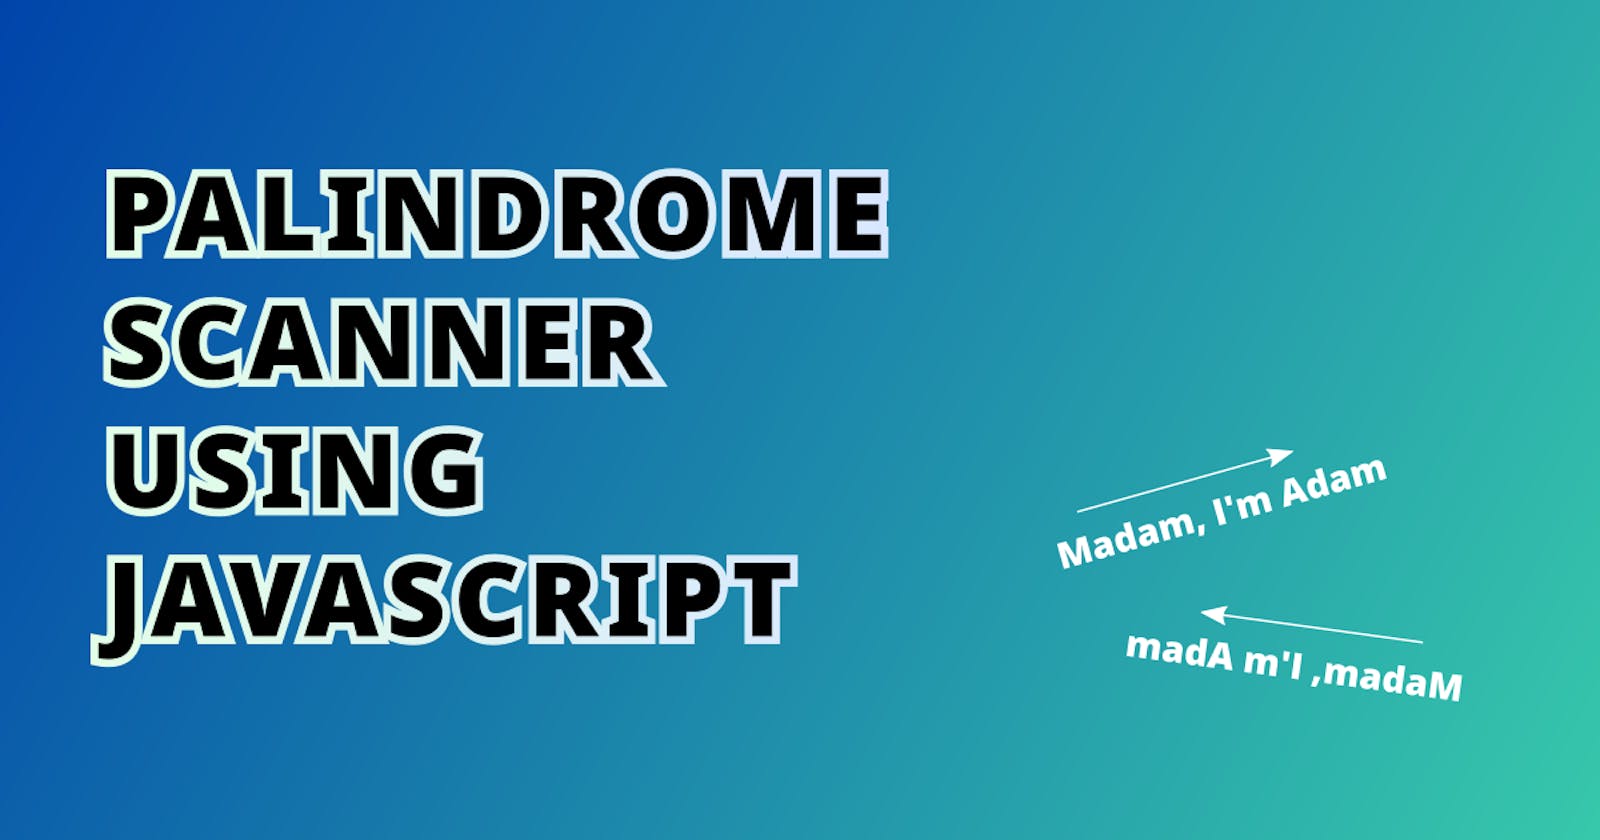 Palindrome Scanner Using JavaScript